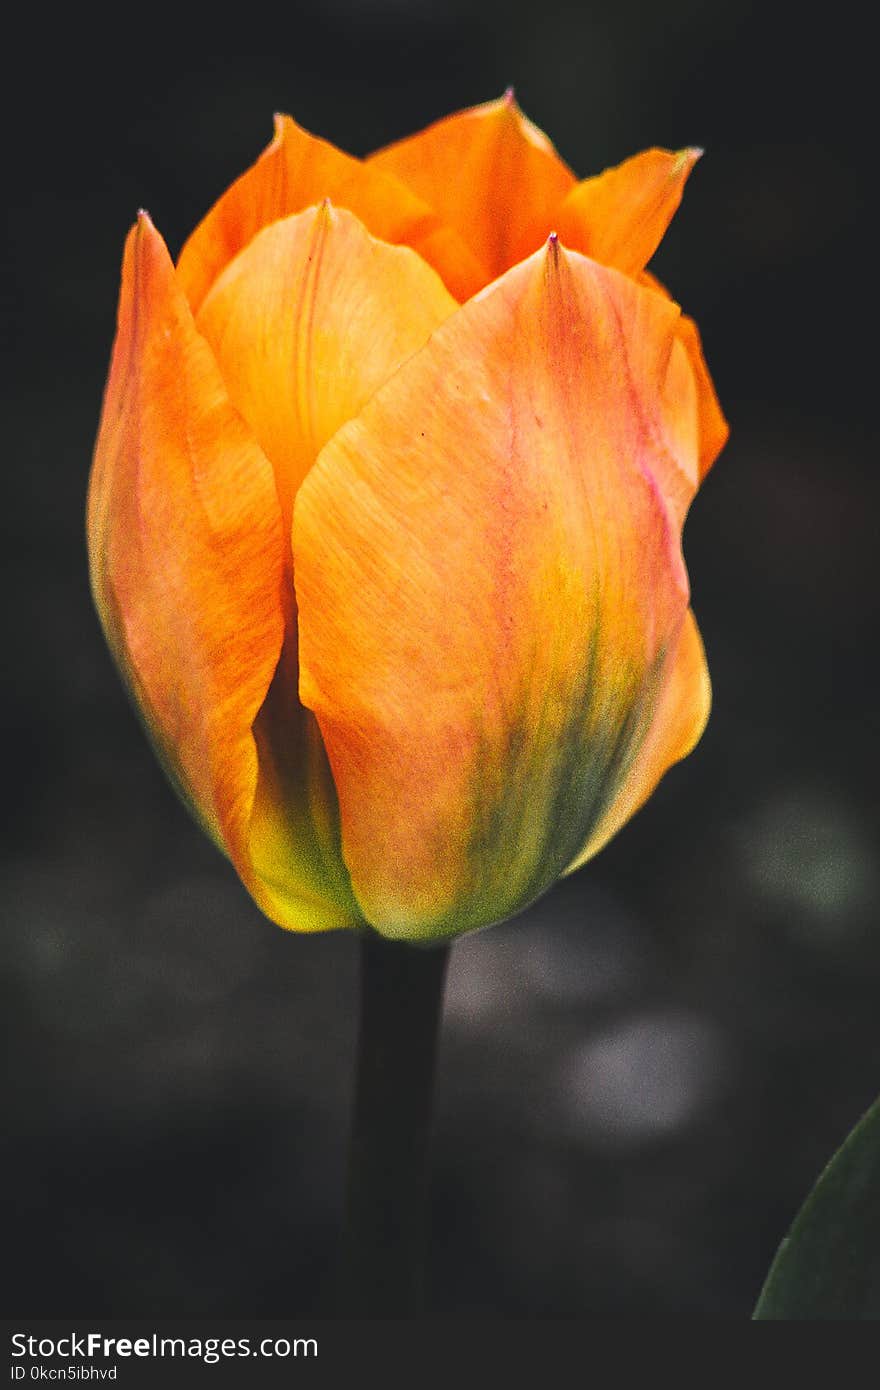 Selective Focus Photography of Orange Tulip Flower